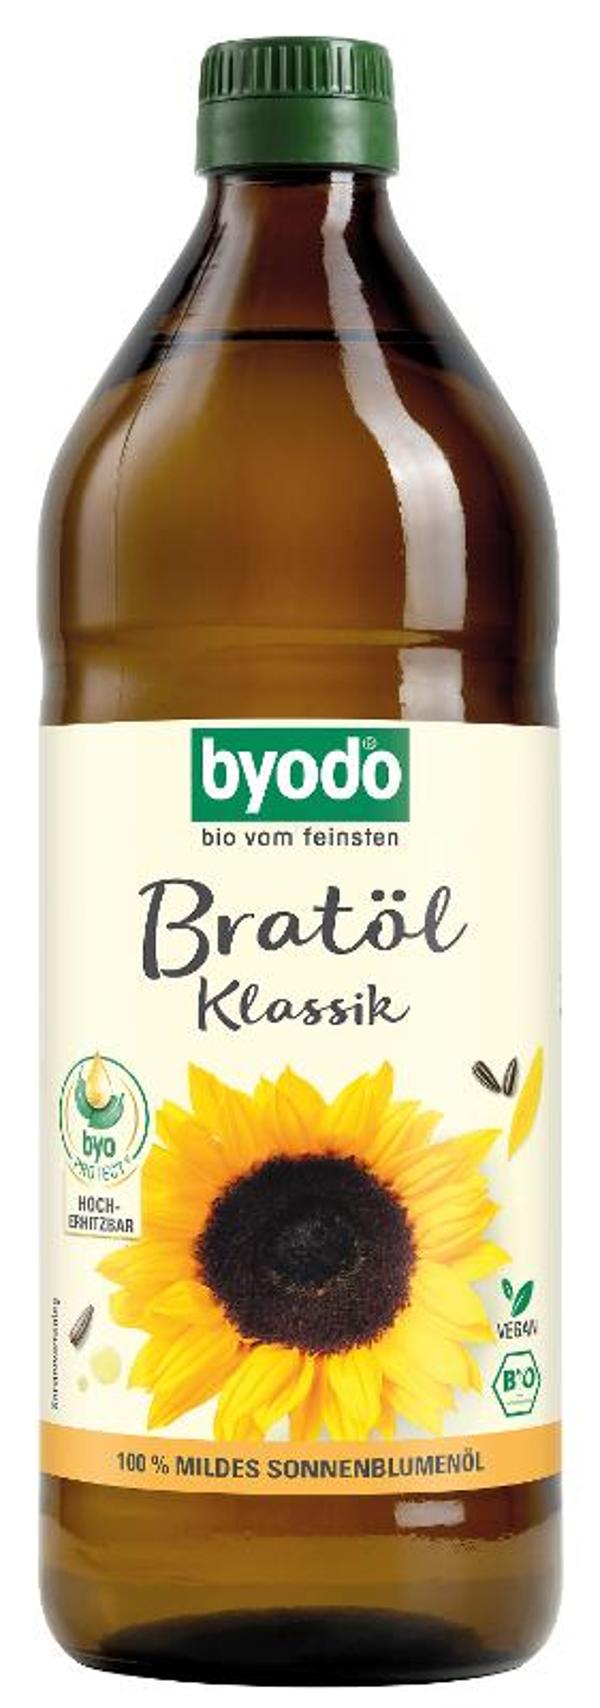 Produktfoto zu Byodo Bratöl - 0,75l